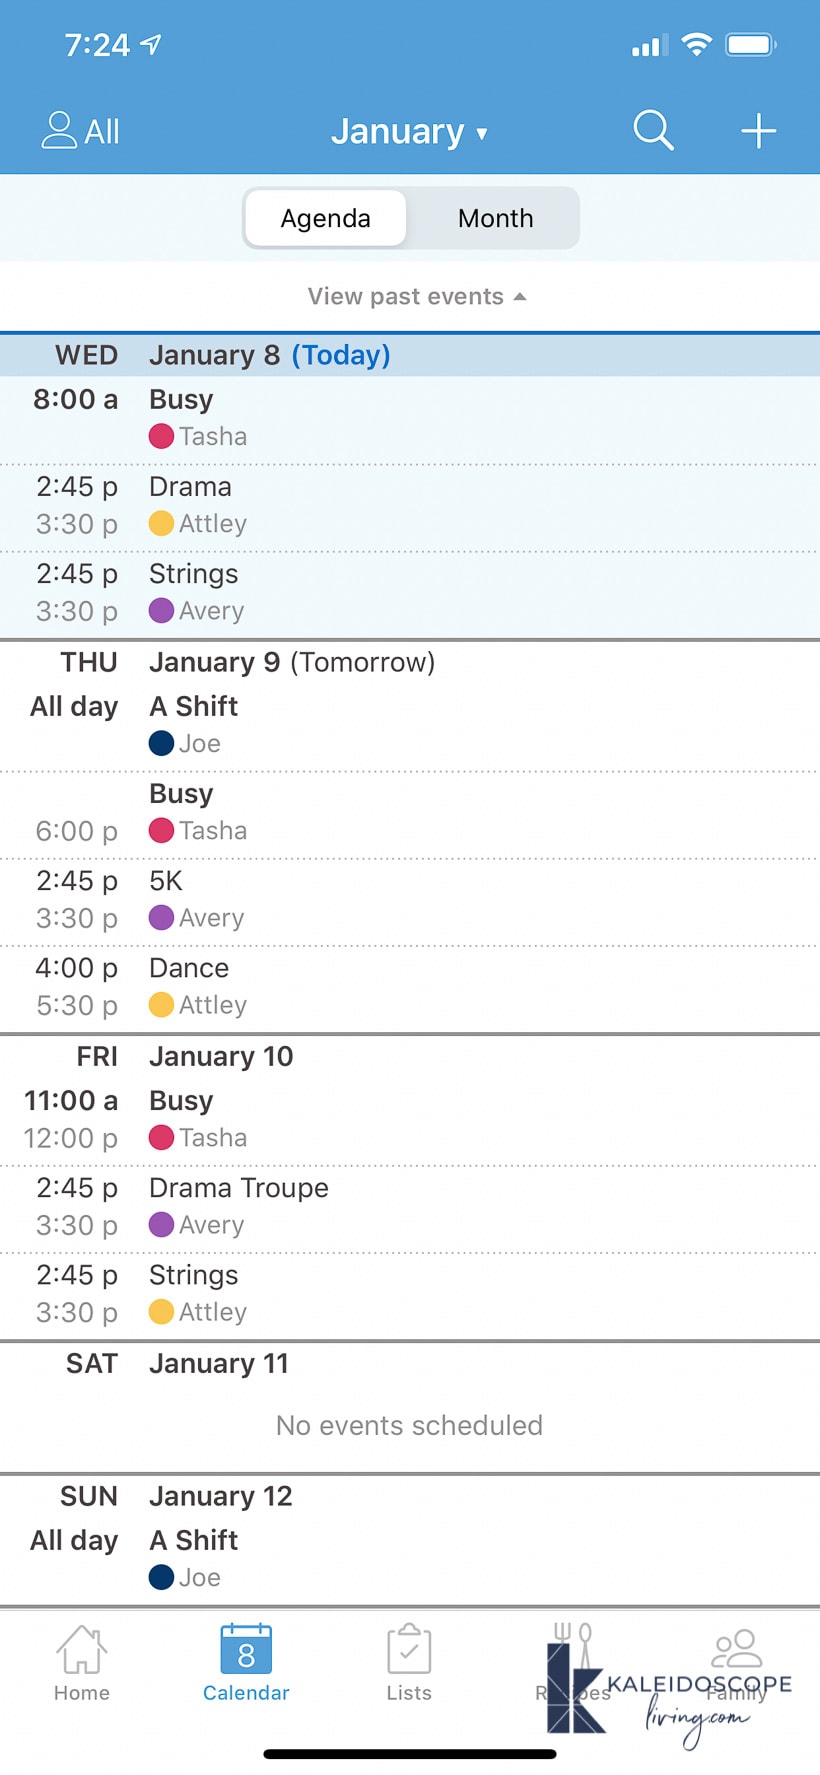 cozi app calendar to keep family schedules organized